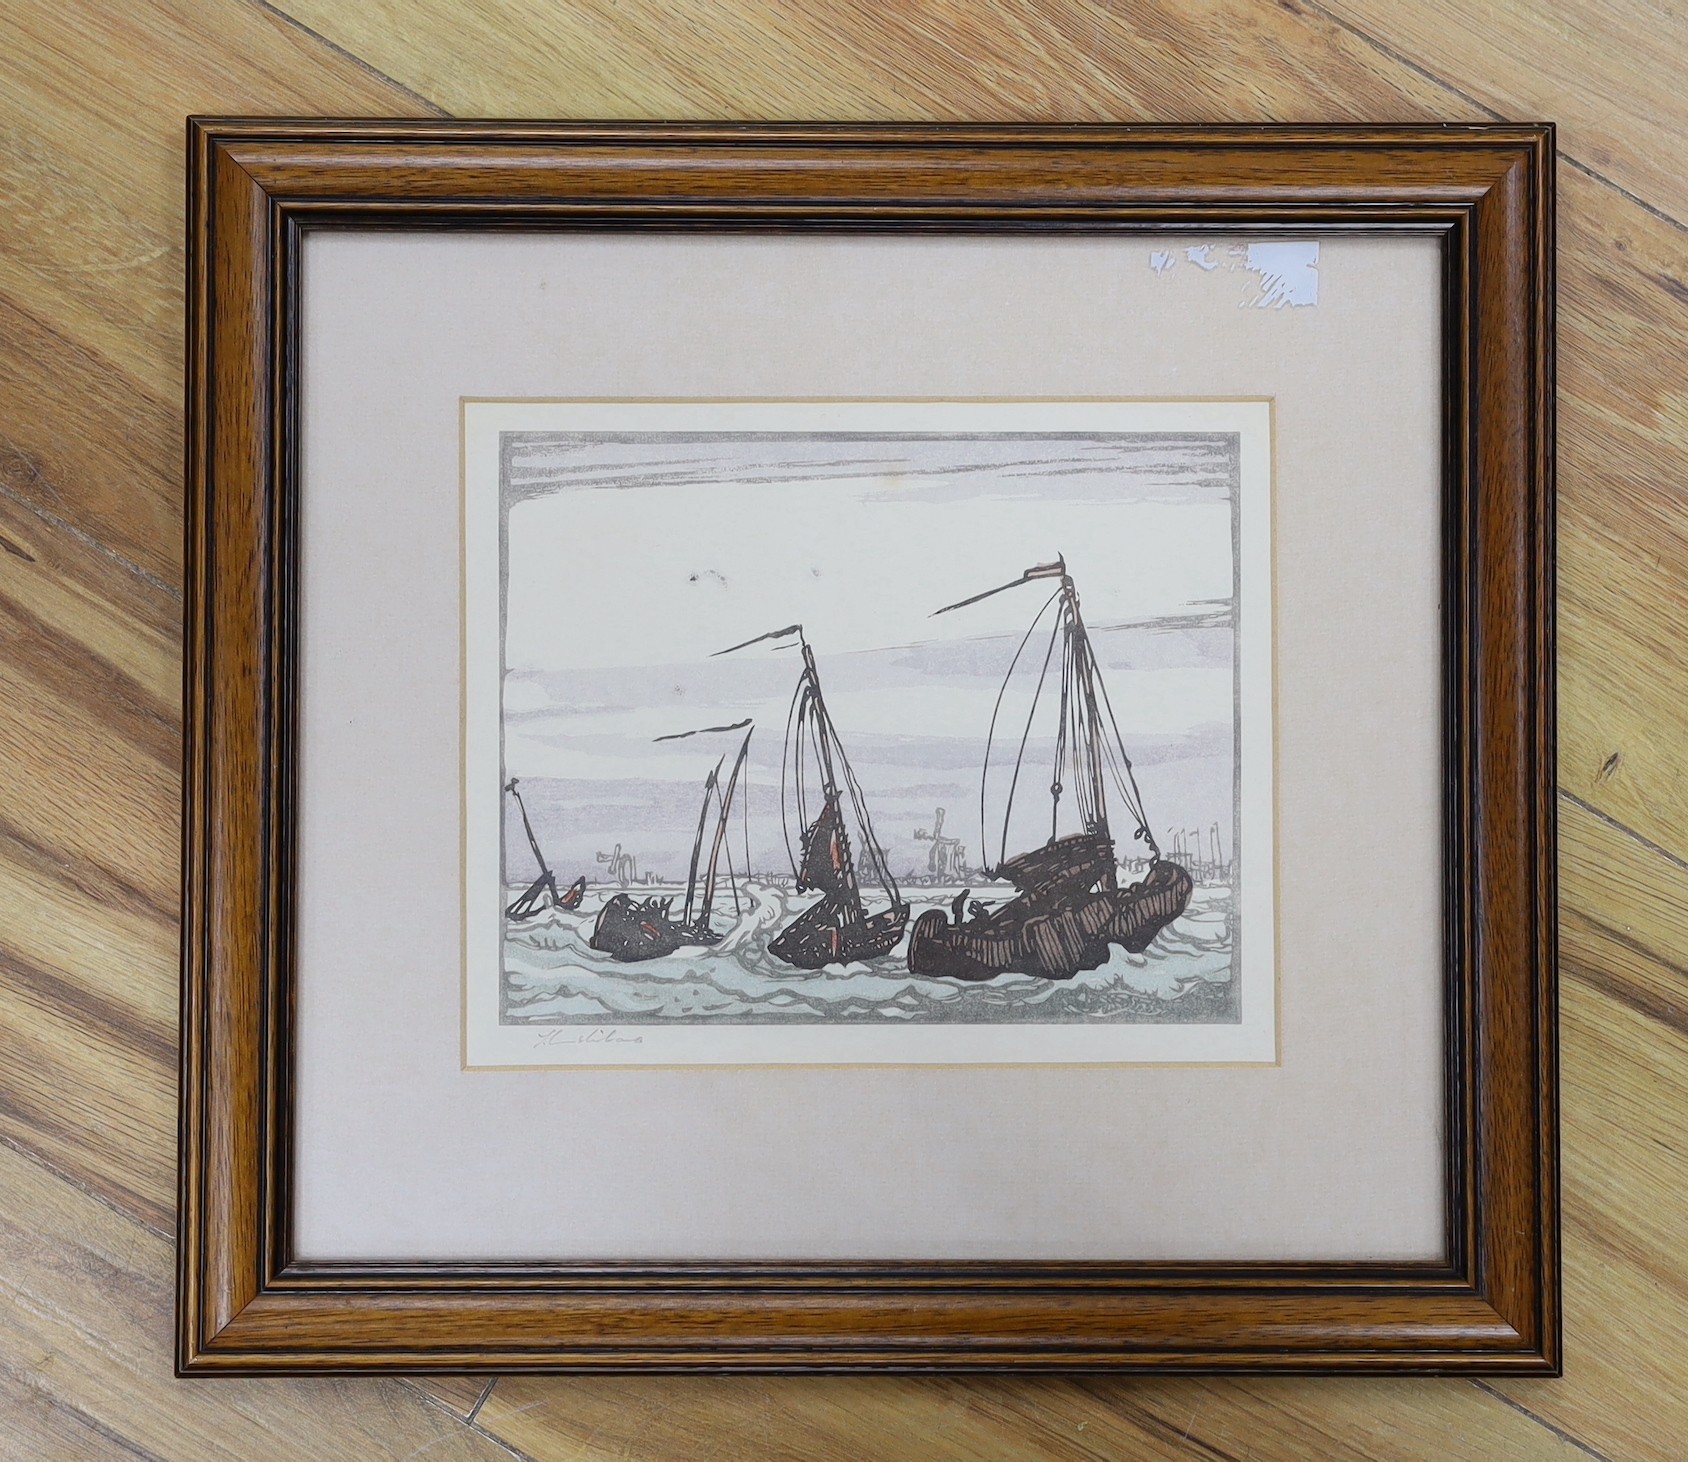 Yoshijiro Urushibara (1888-1953), woodblock print, Dutch barges off the coast, signed in the plate, 17 x 21cm